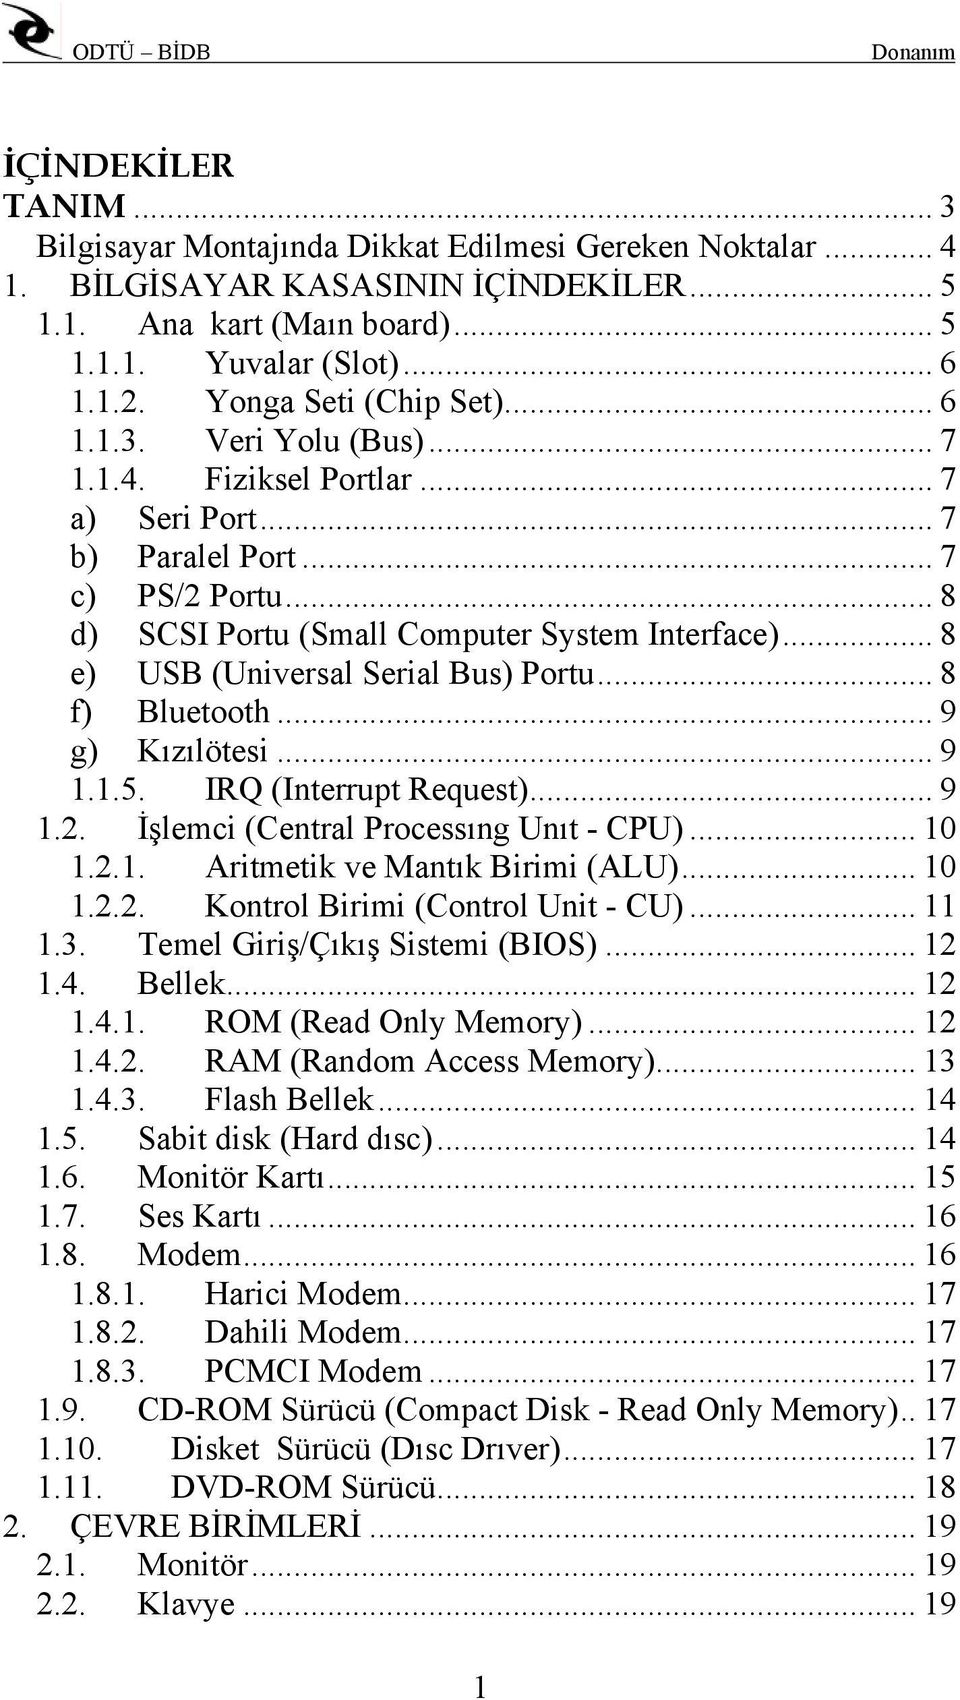 .. 8 e) USB (Universal Serial Bus) Portu... 8 f) Bluetooth... 9 g) Kızılötesi... 9 1.1.5. IRQ (Interrupt Request)... 9 1.2. İşlemci (Central Processıng Unıt - CPU)... 10 1.2.1. Aritmetik ve Mantık Birimi (ALU).